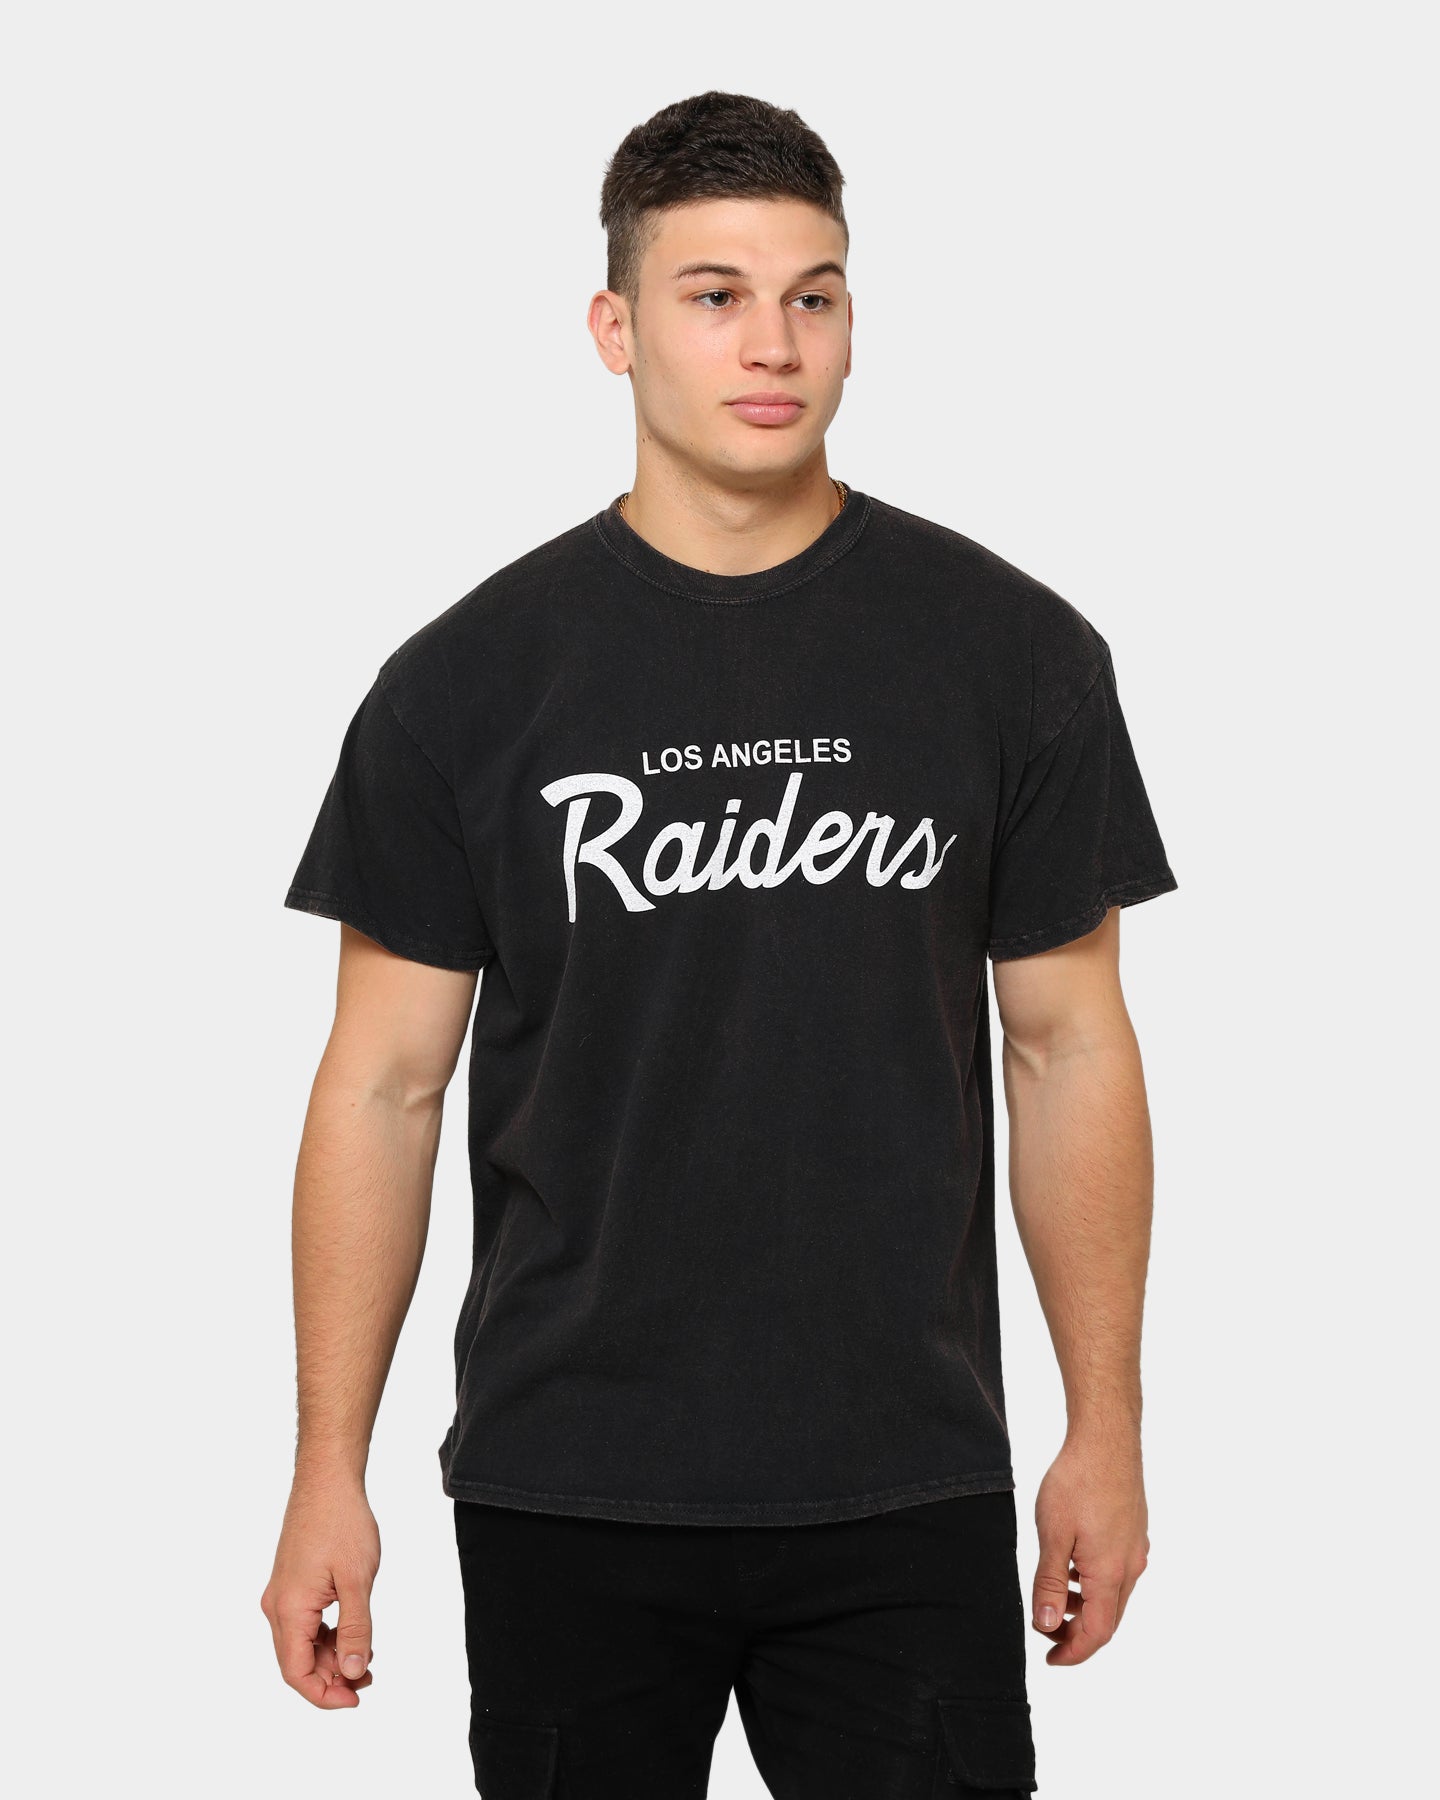 raiders shirt mens